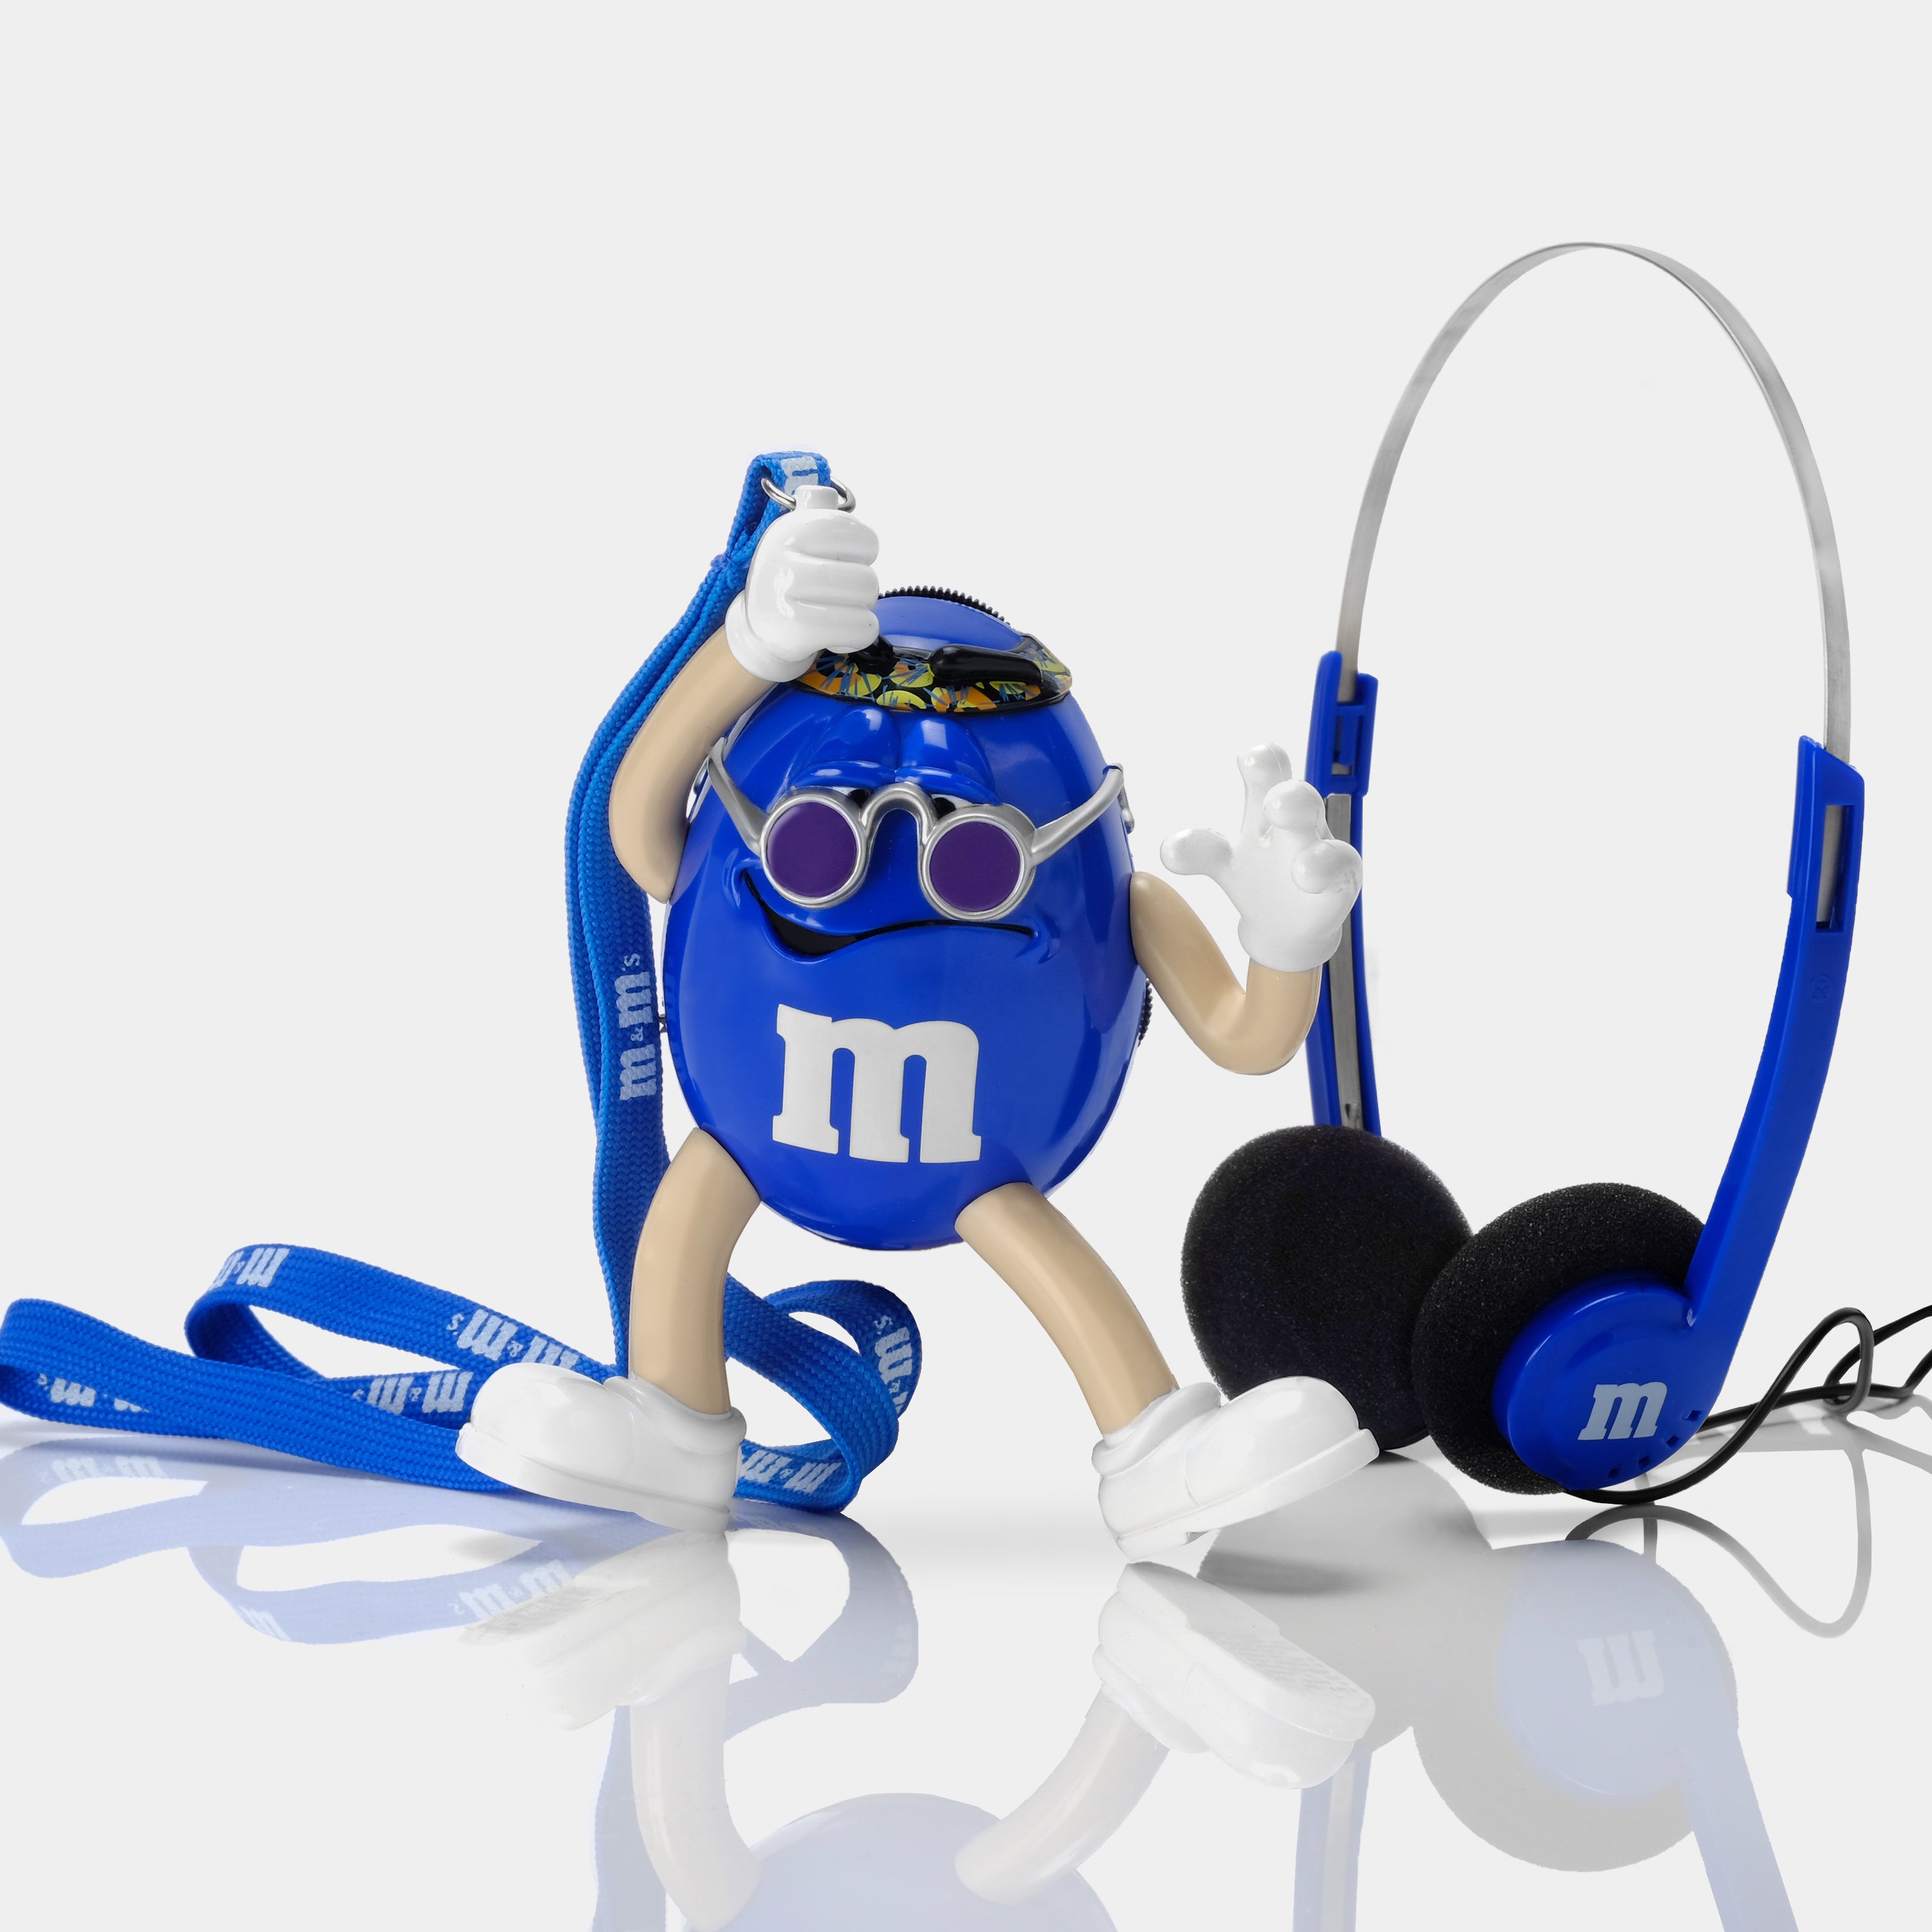 M&M's Groovy Blue Radio